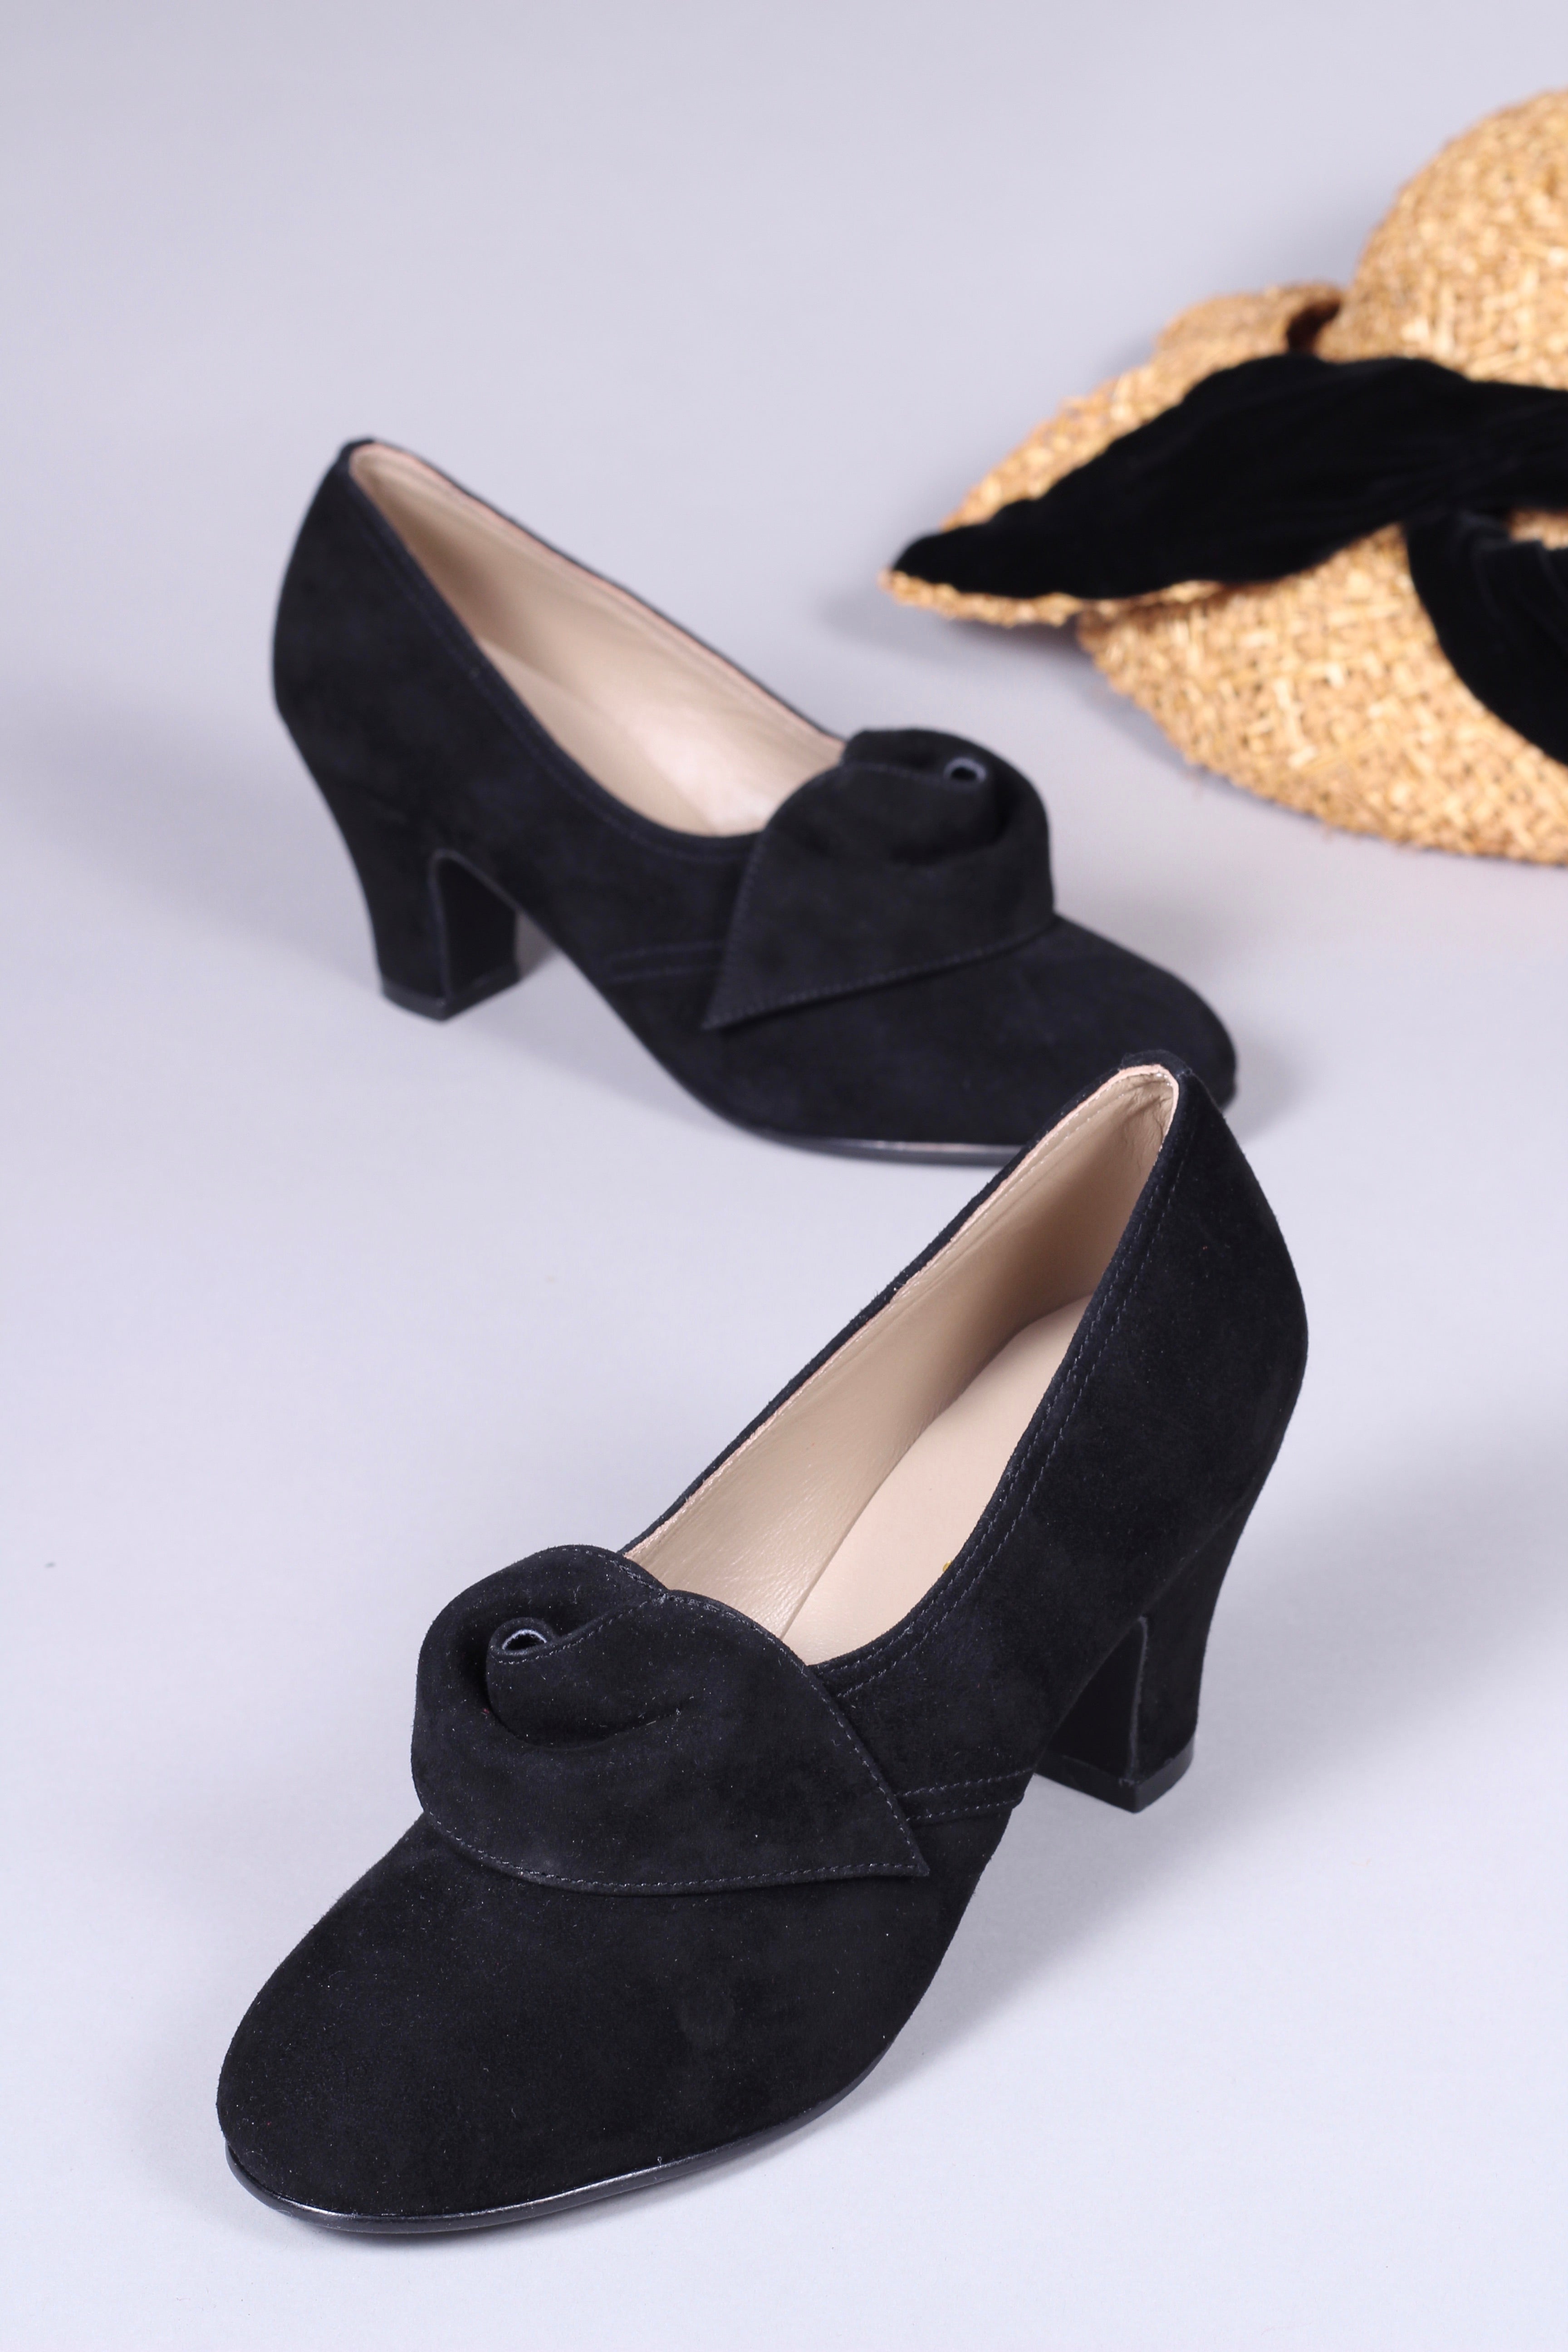 Black pointy toe pump for interchangealbe heels | TANYA HEATH Paris – Tanya  Heath Paris